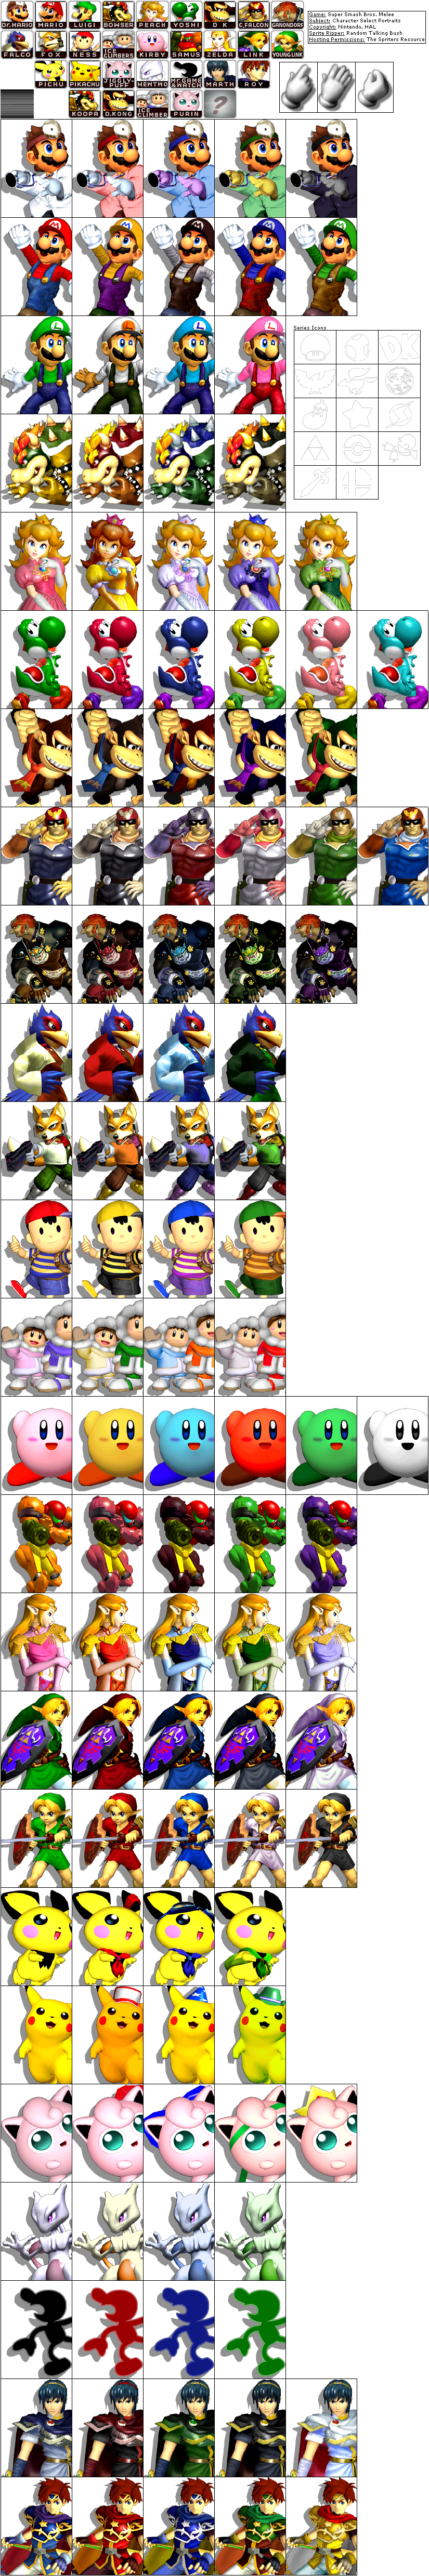 Super Smash Bros. Melee - Character Select Portraits